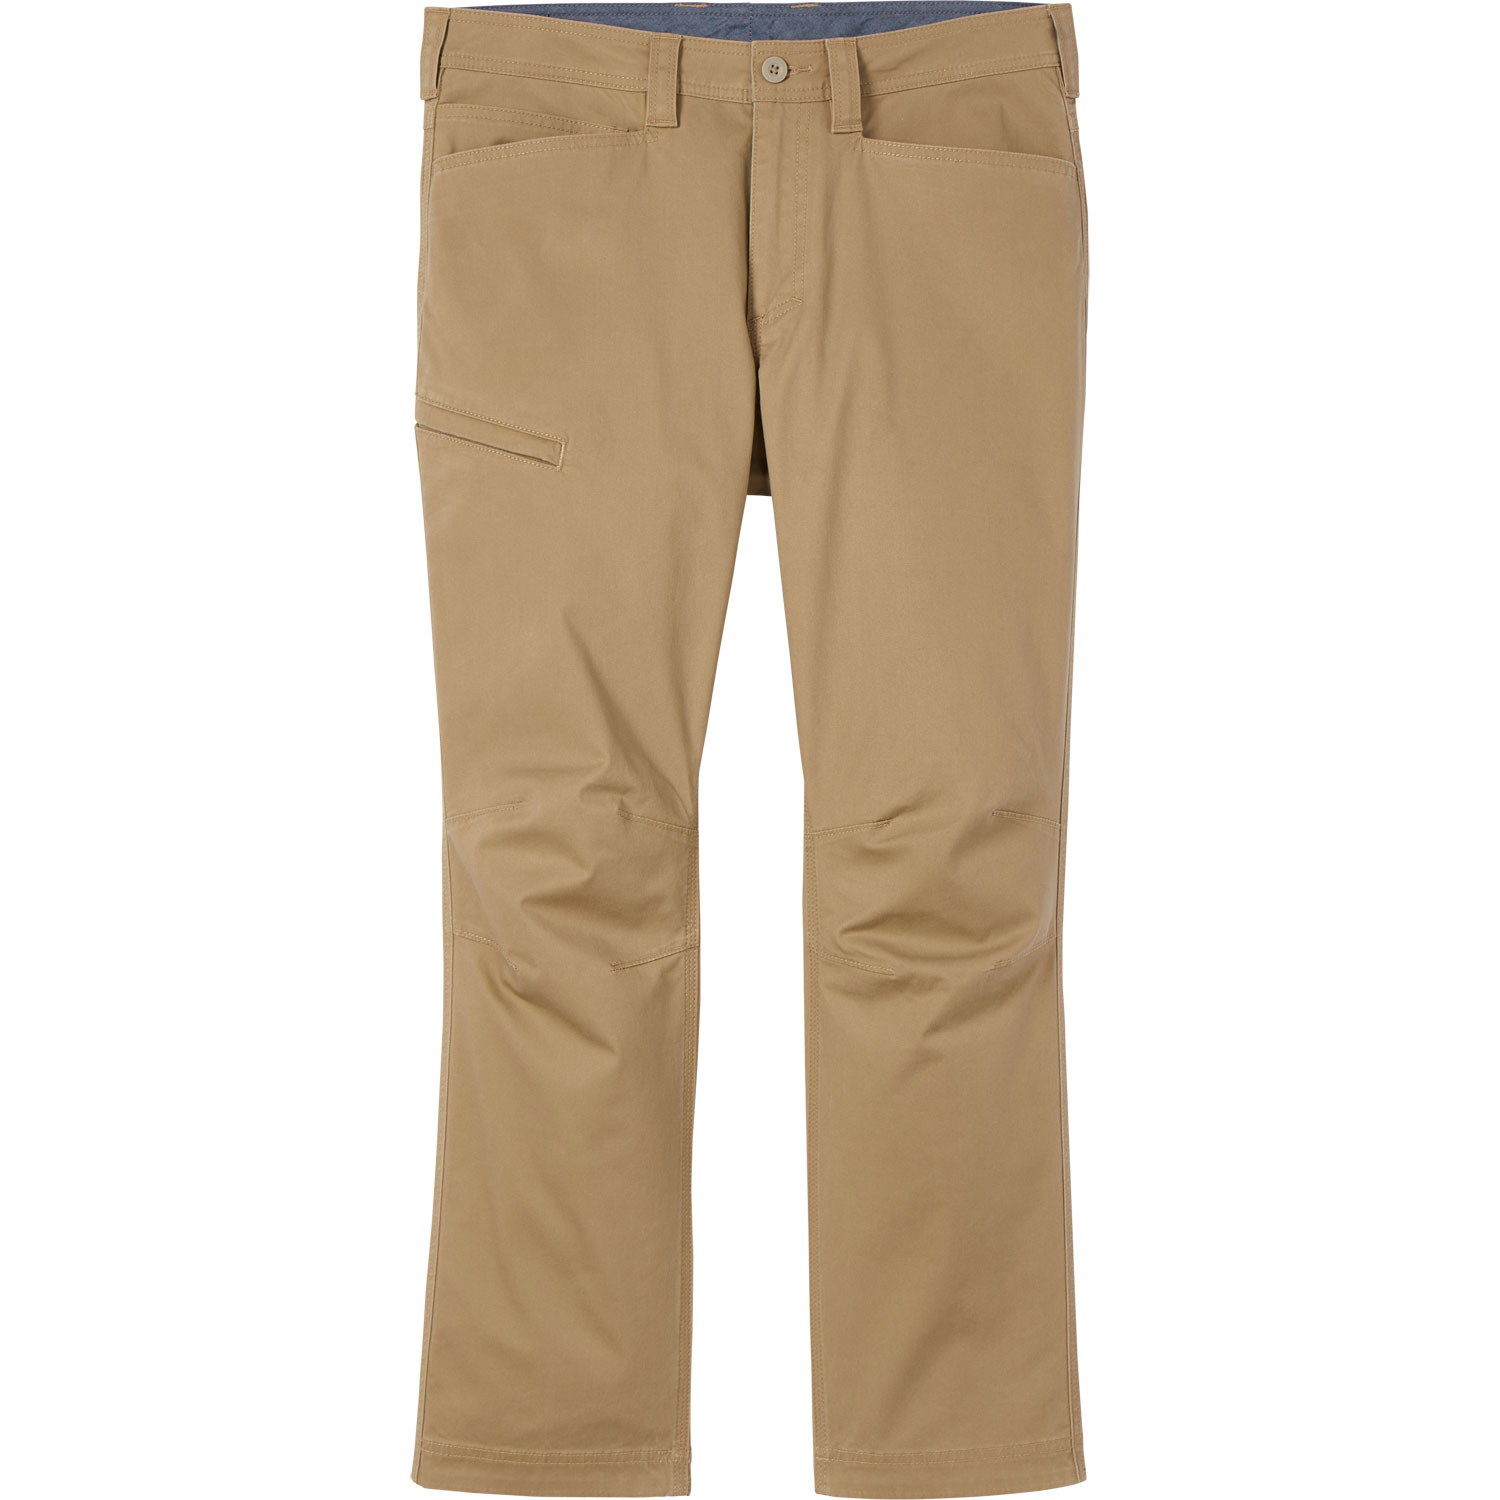 Men's Powercord Standard Fit Pants